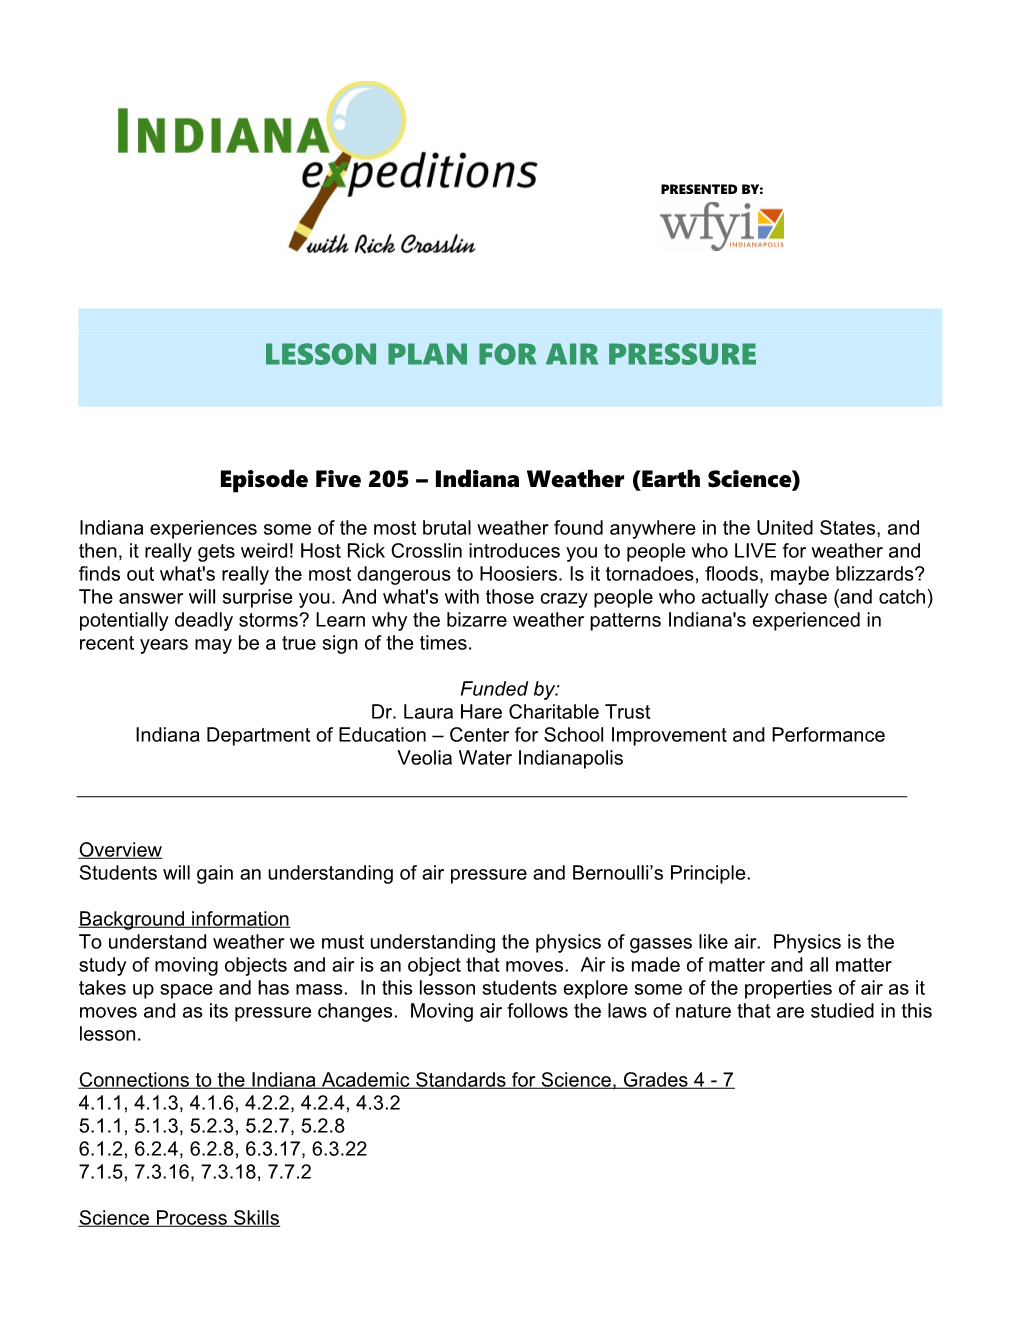 Lesson Plan for Air Pressure